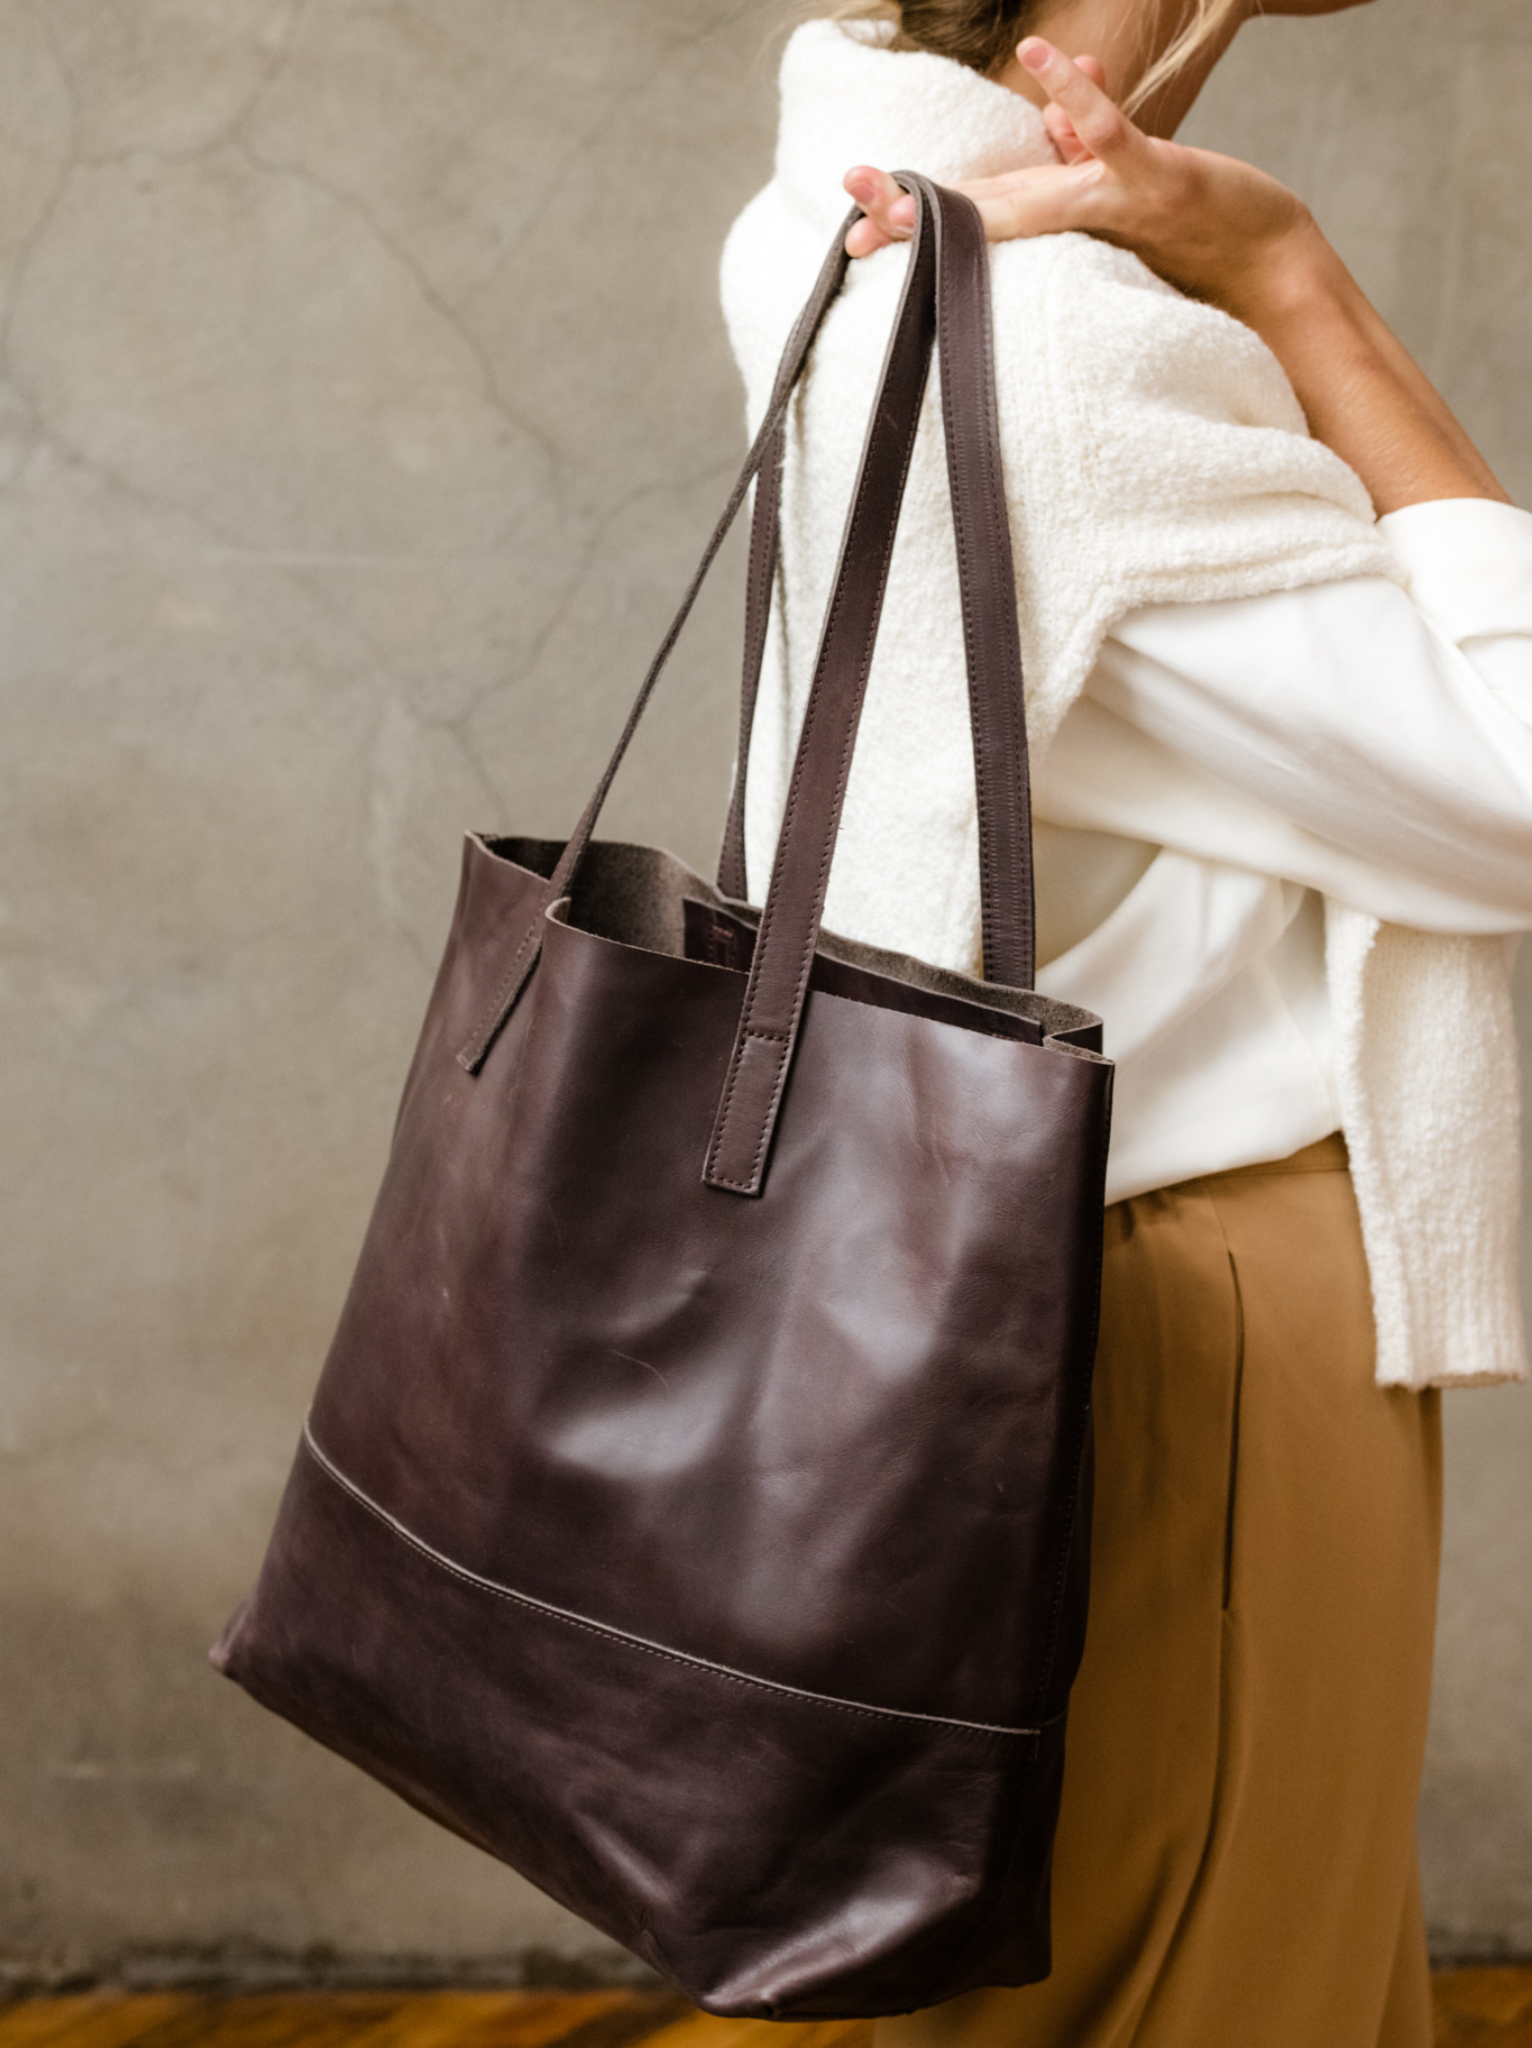 Amazon.com: Spring Purses And Handbags - Women's Handbags, Purses & Wallets  / Women's Fashio...: Clothing, Shoes & Jewelry